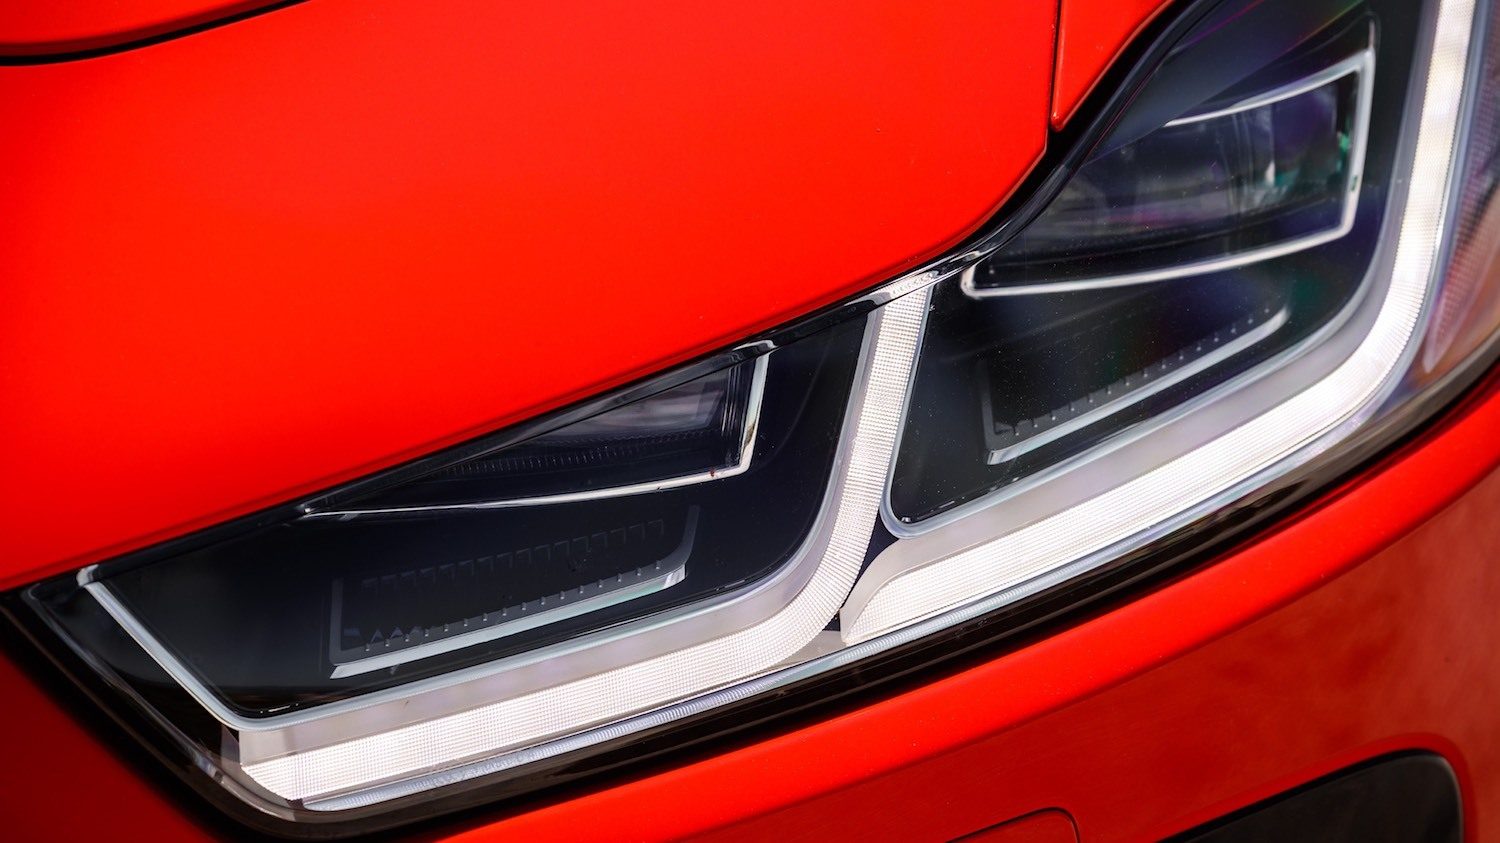 Neil Lyndon reviews the 2018 All-New Jaguar I-Pace Premium Electric SUV 21